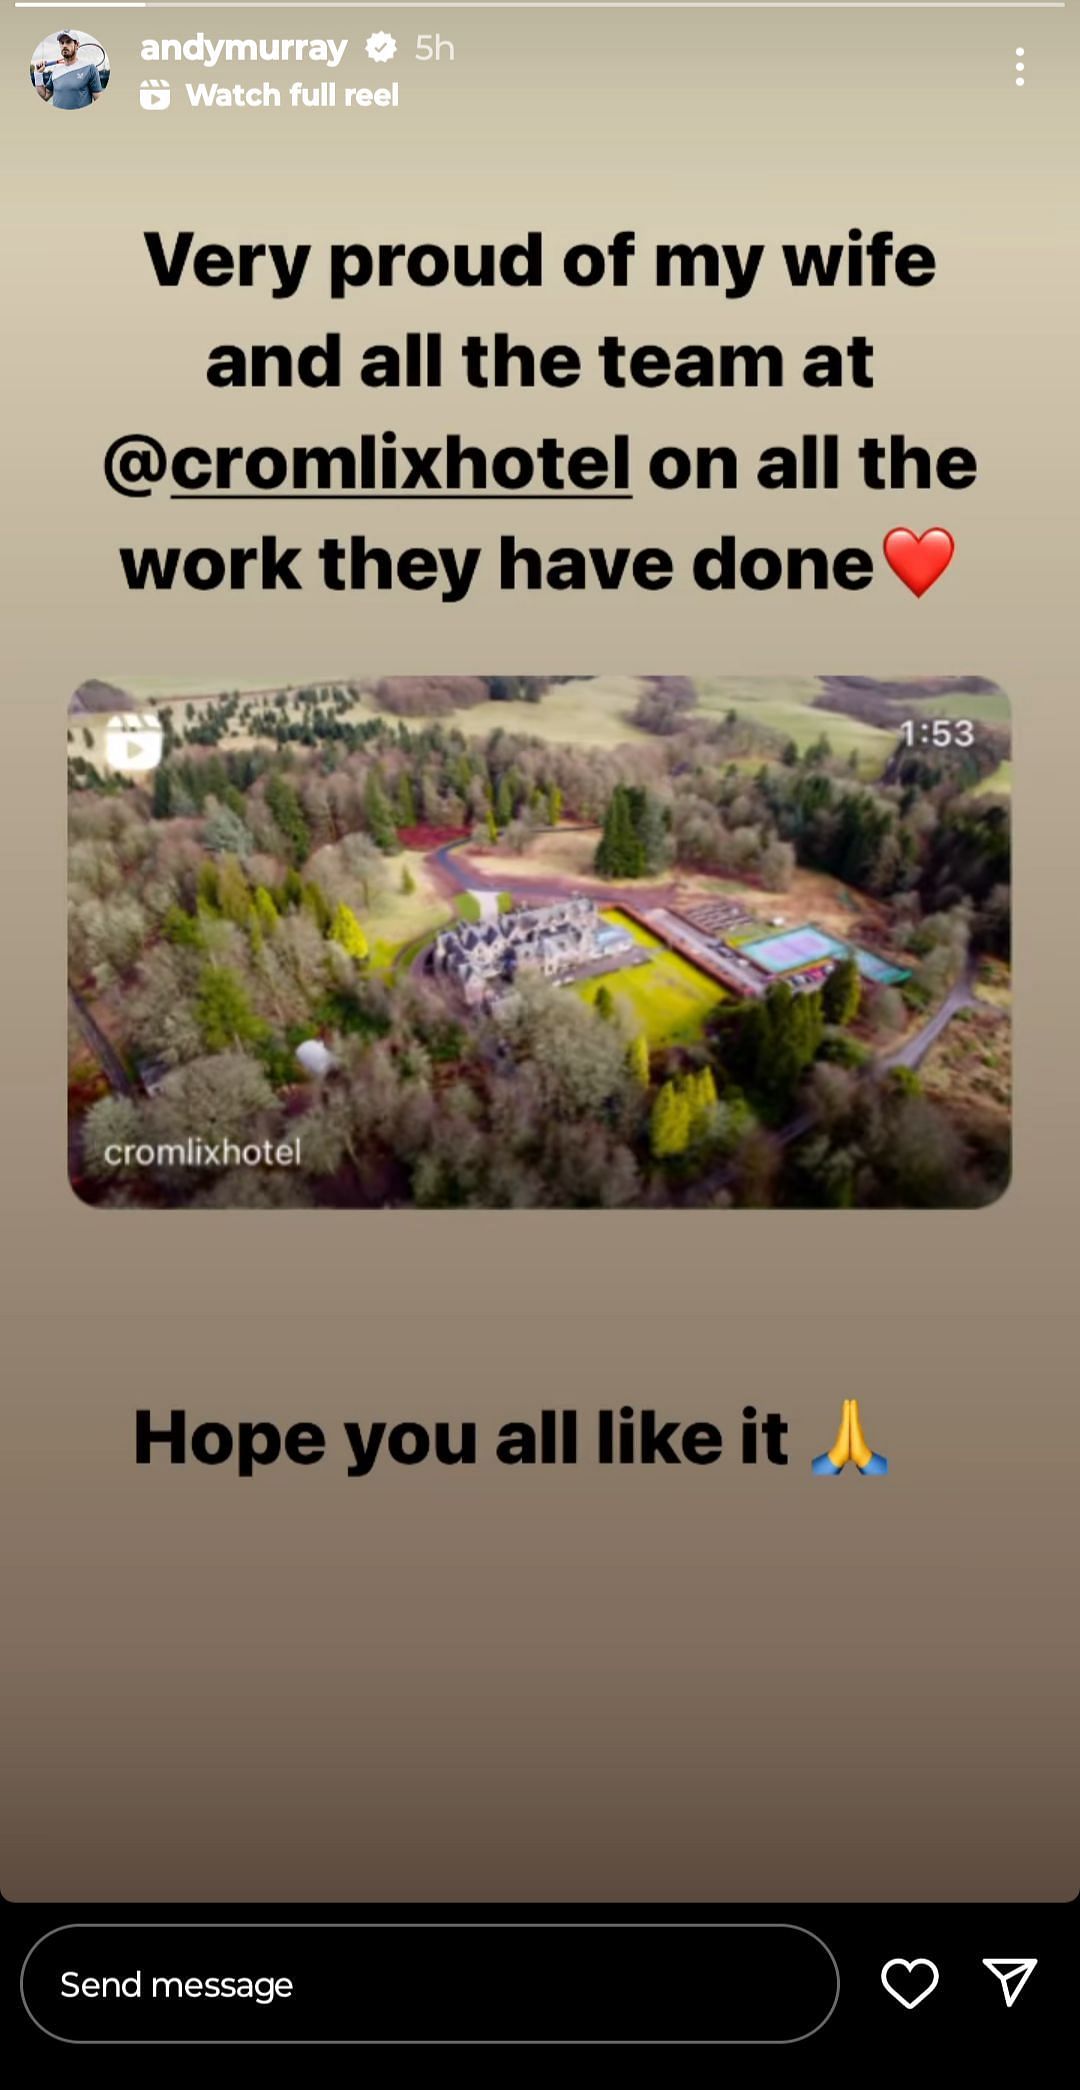 Murray on Instagram